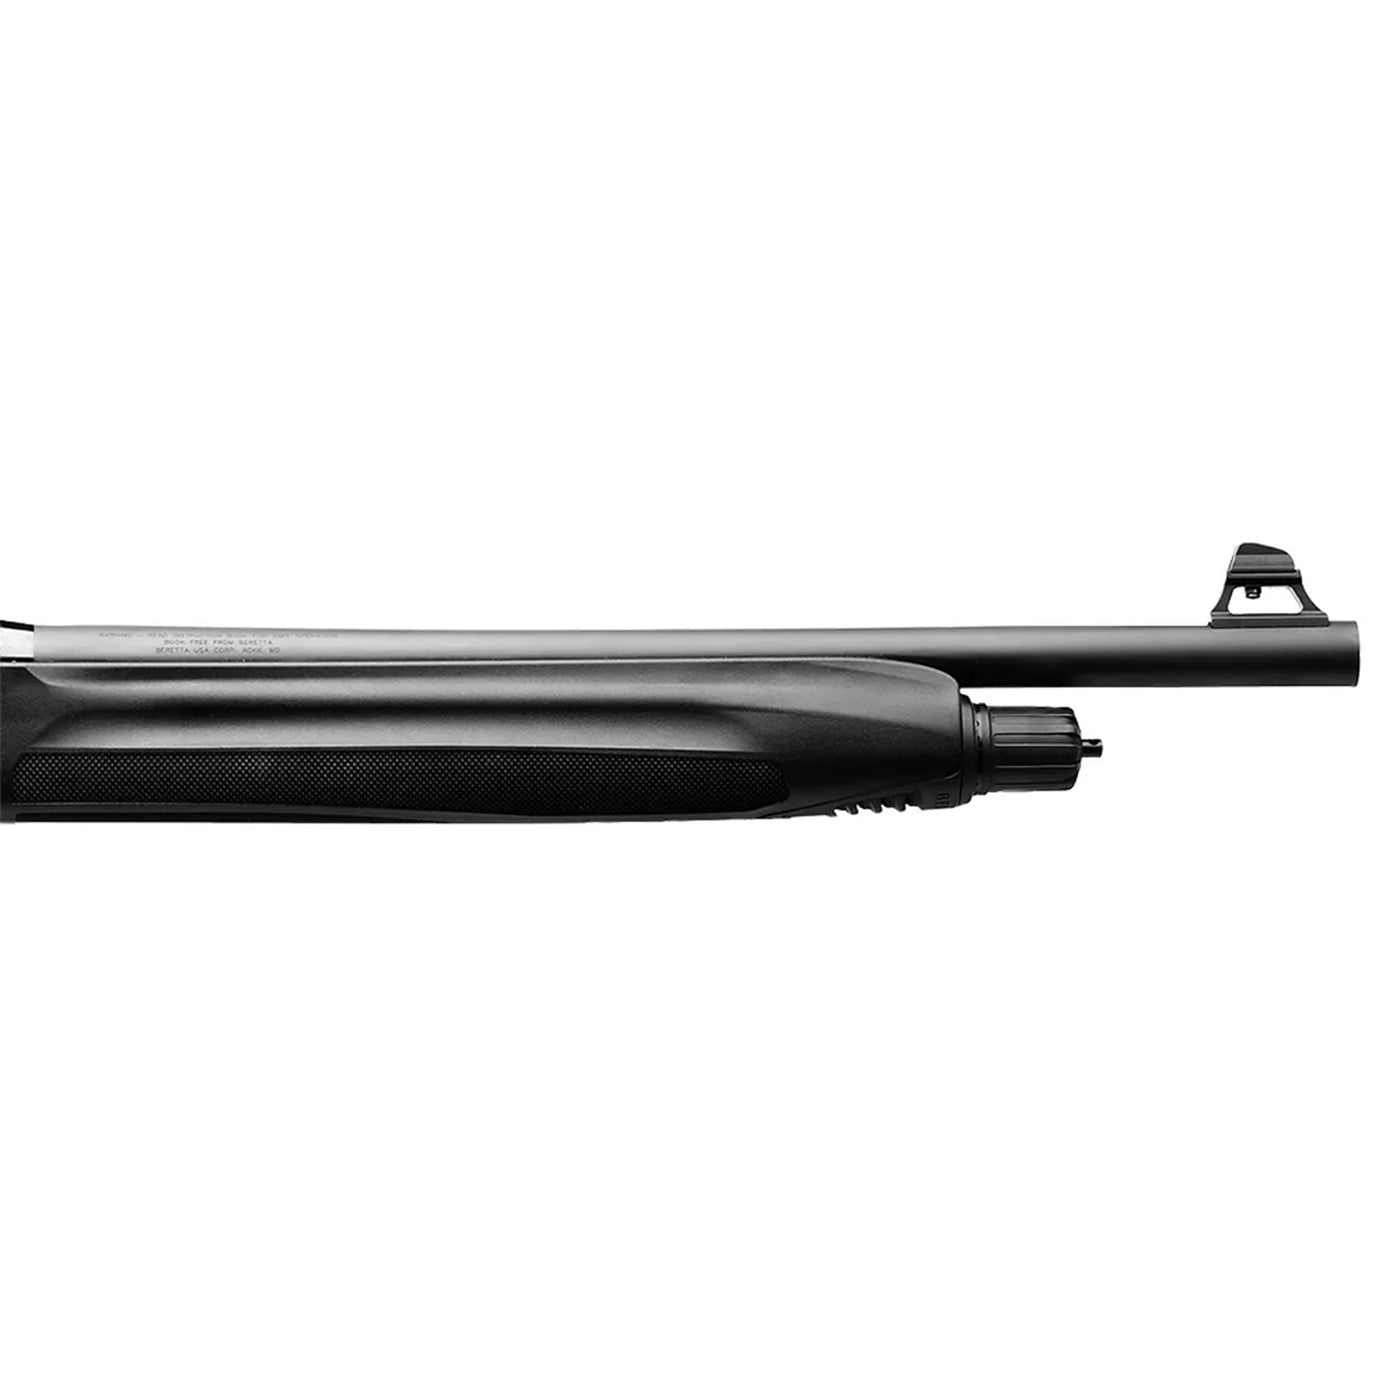 Beretta 1301 tactical for sale